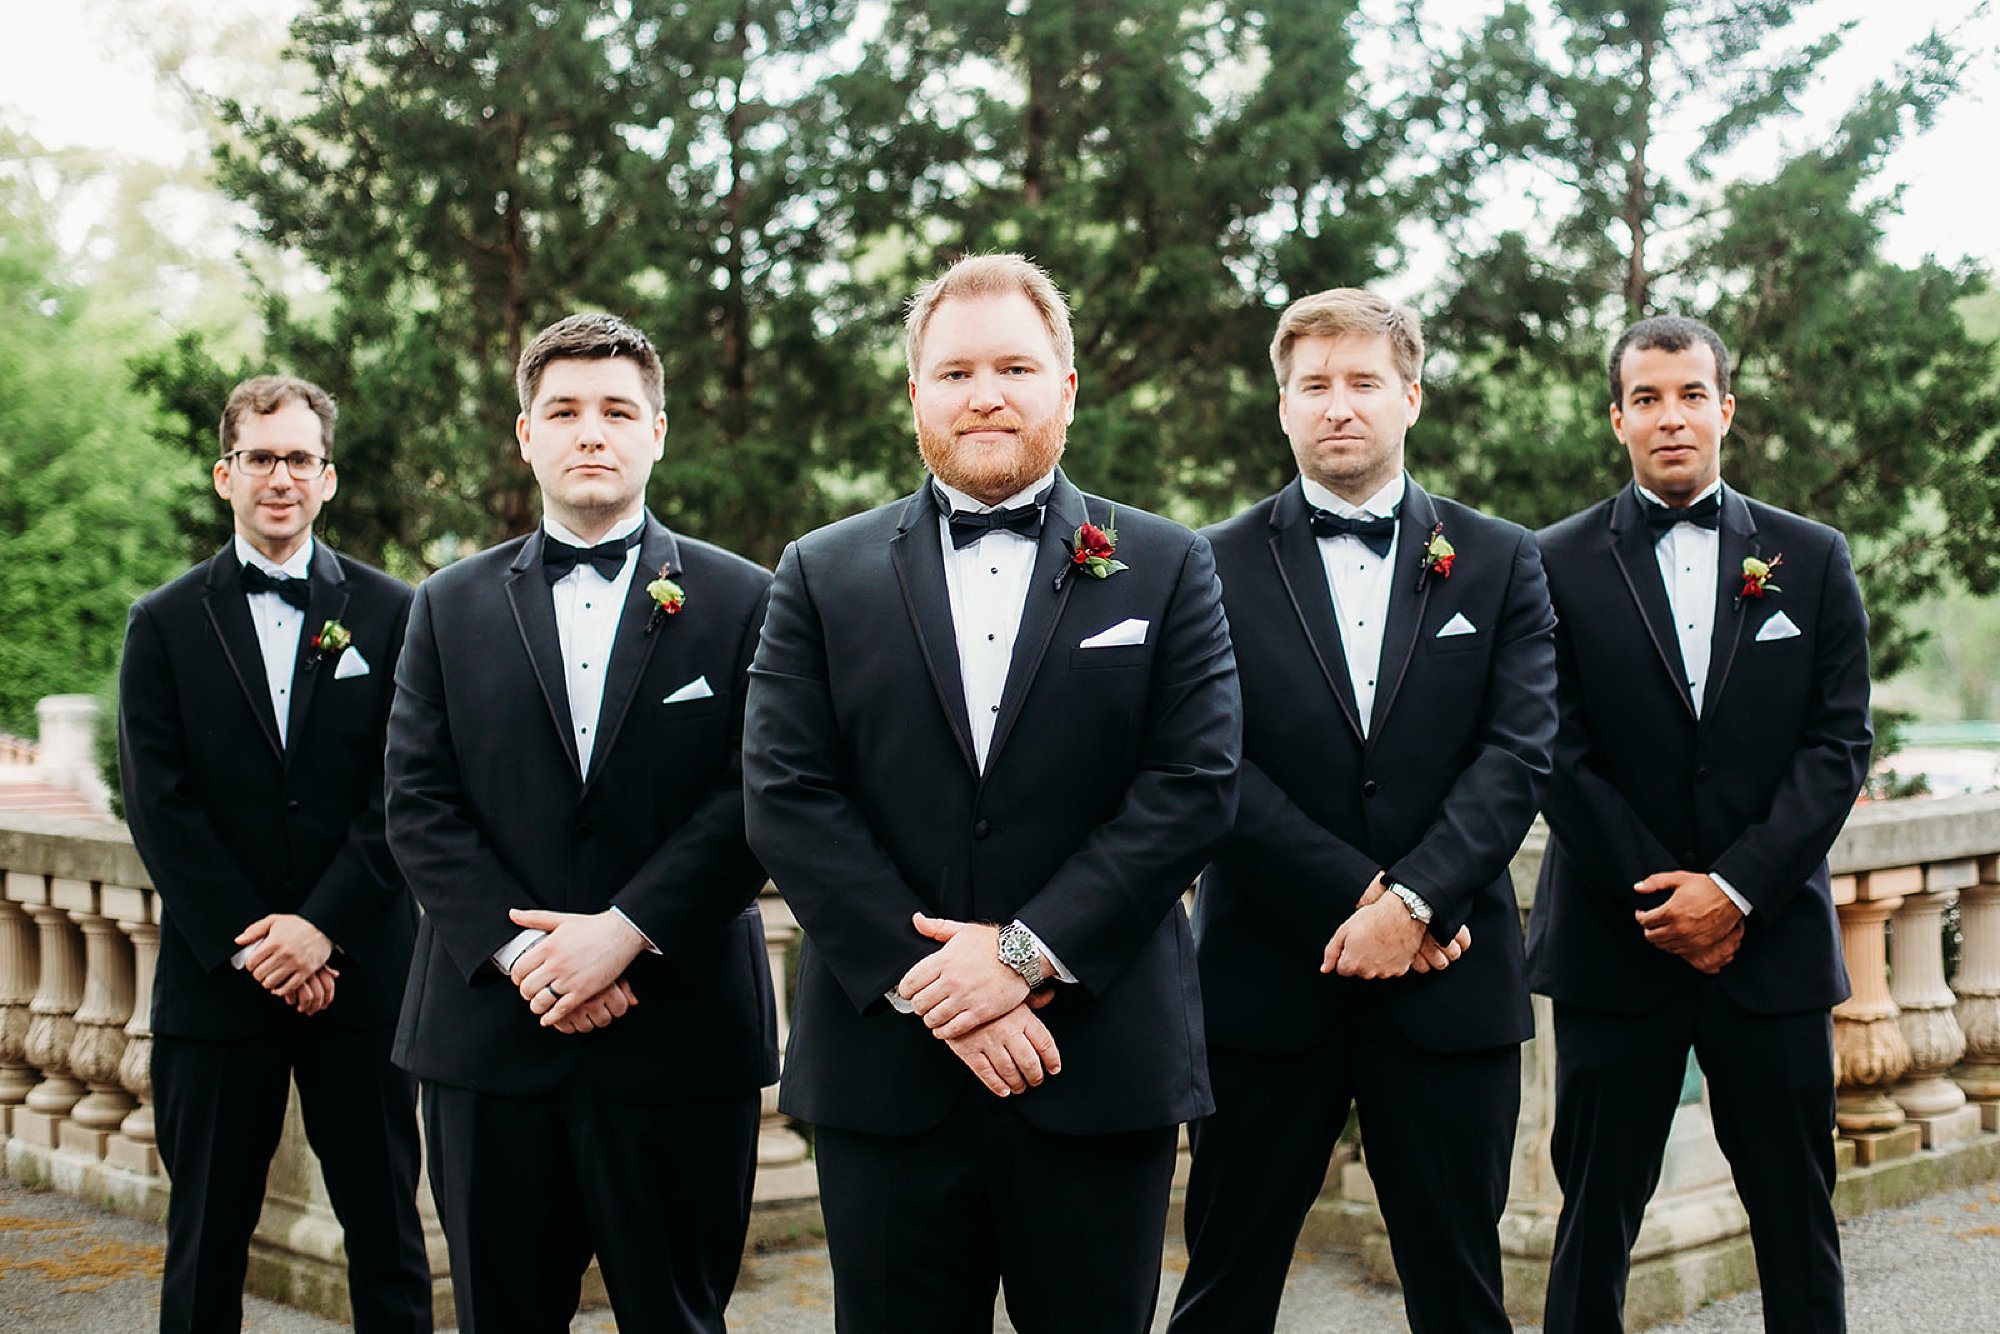 groom stands with groomsmen in black suits behind him